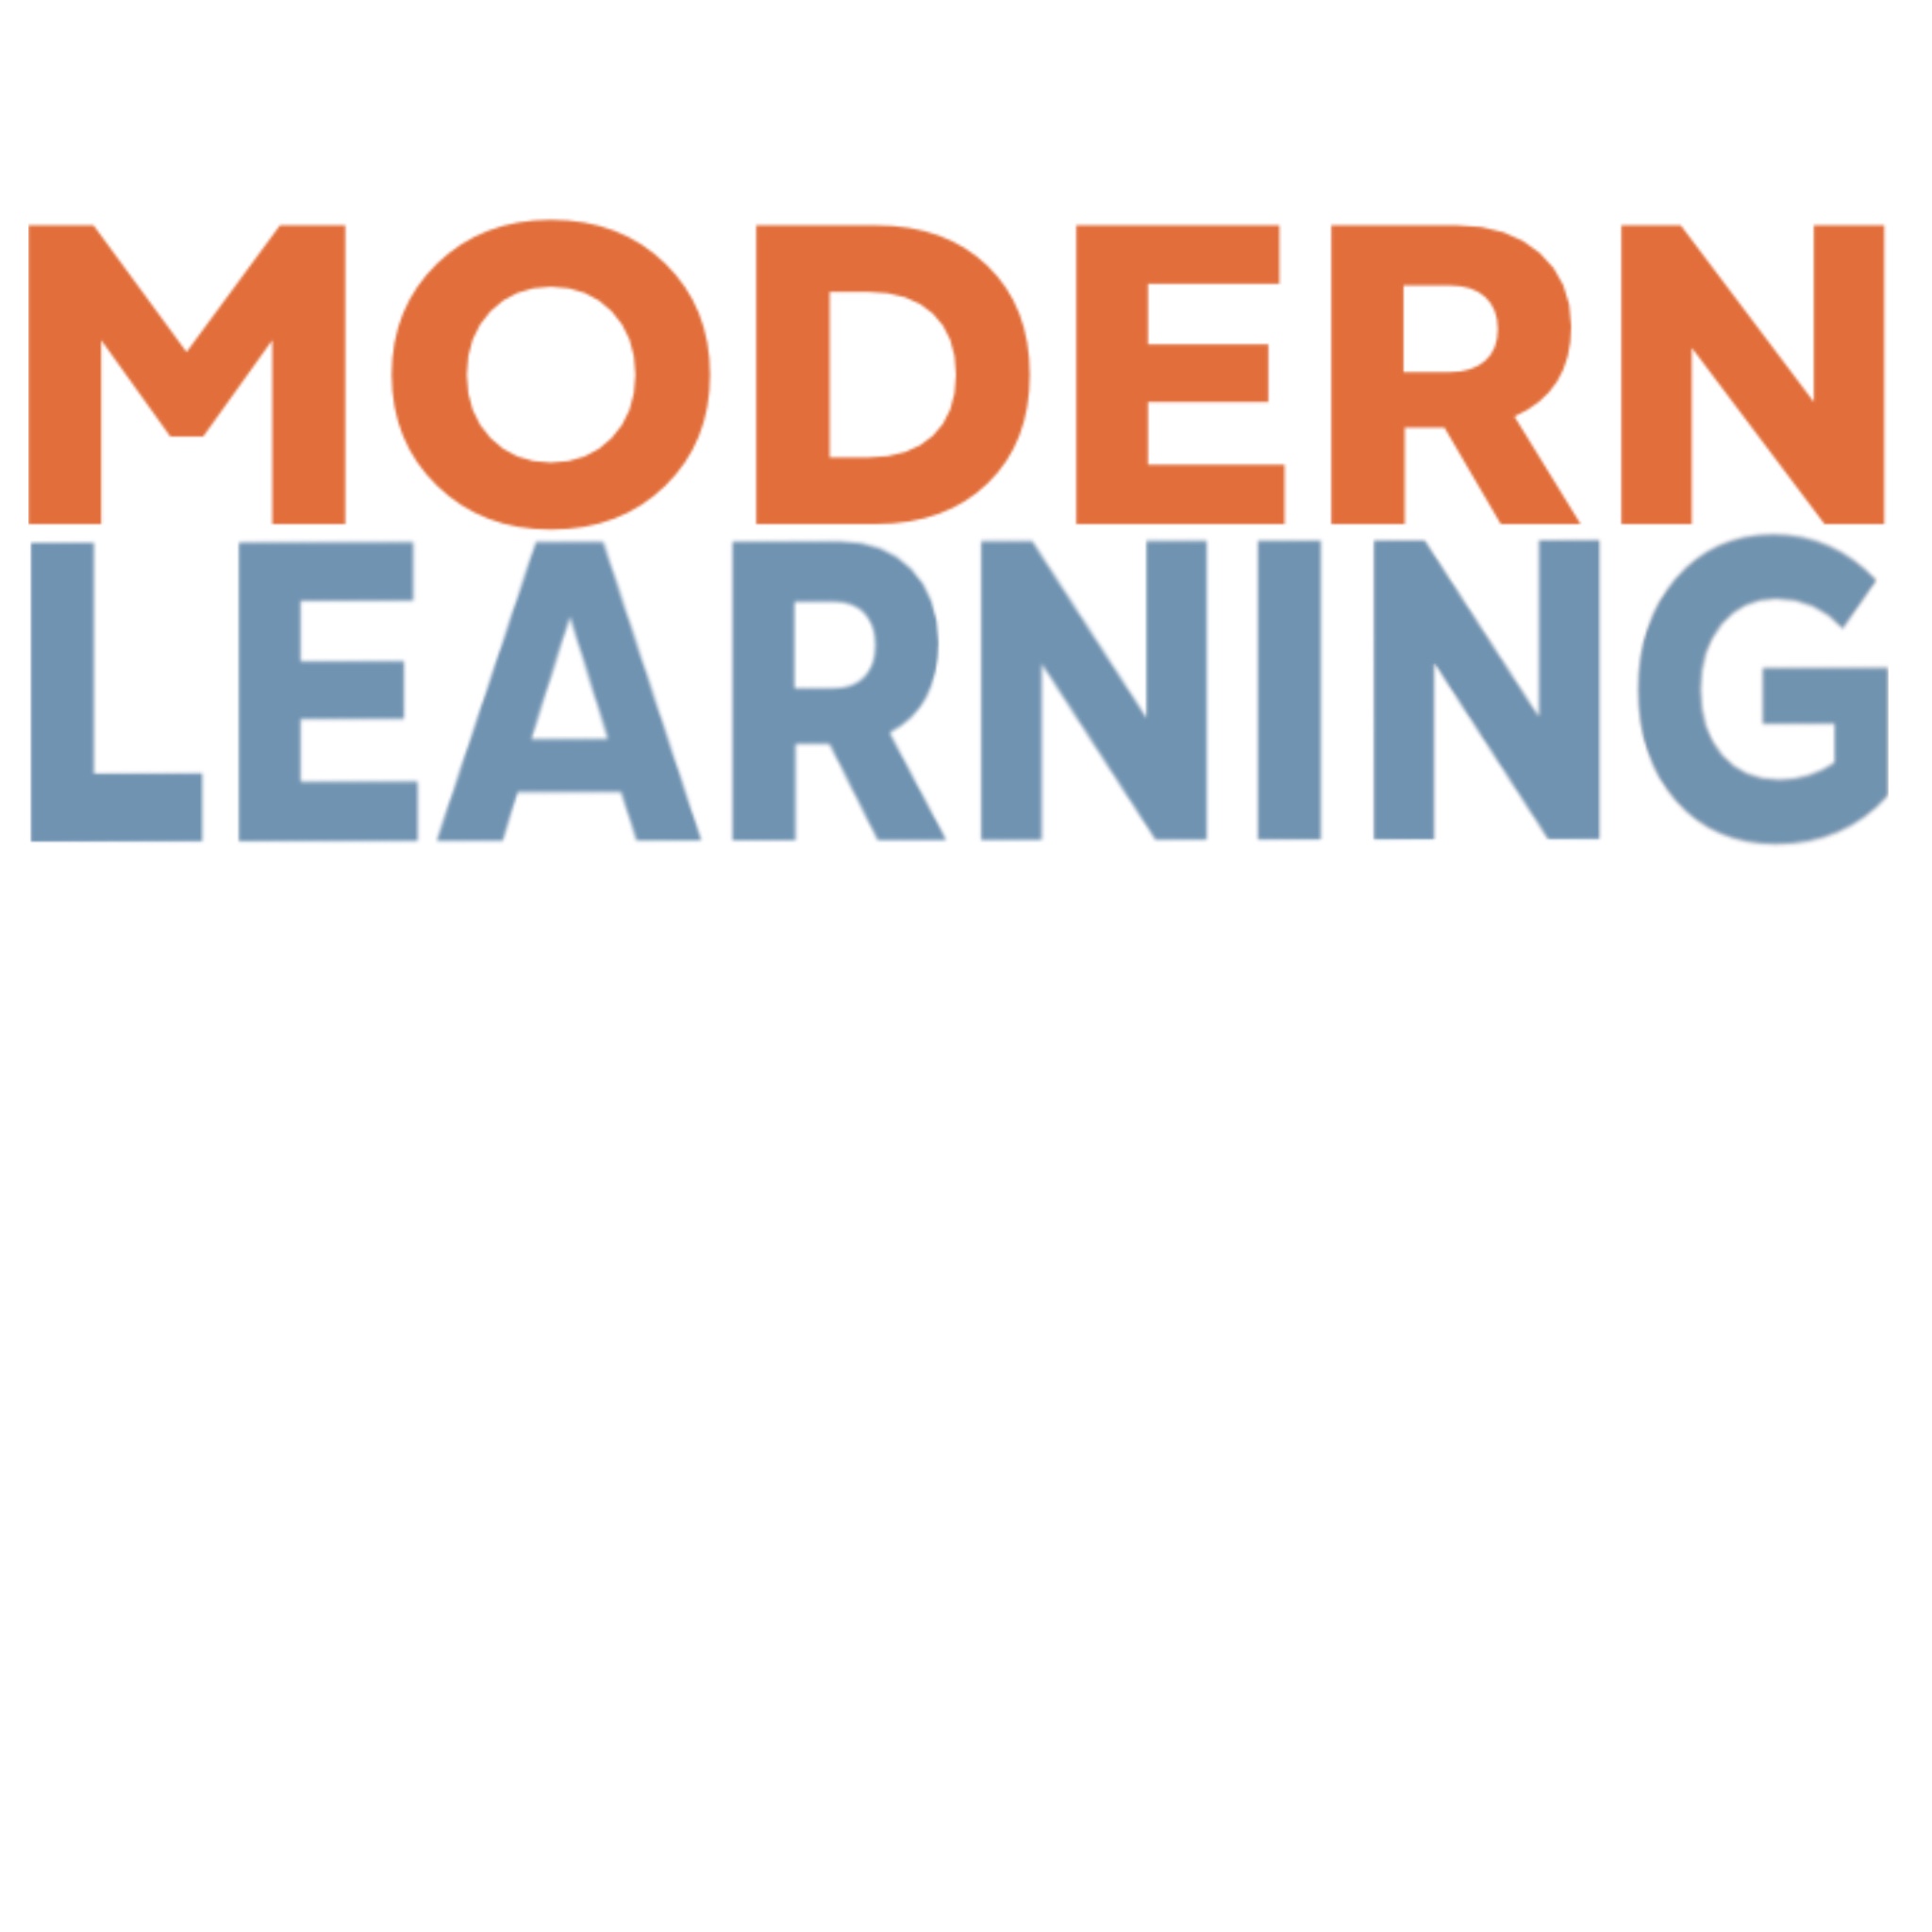 VR-Agressietraining wordt Modern Learning!